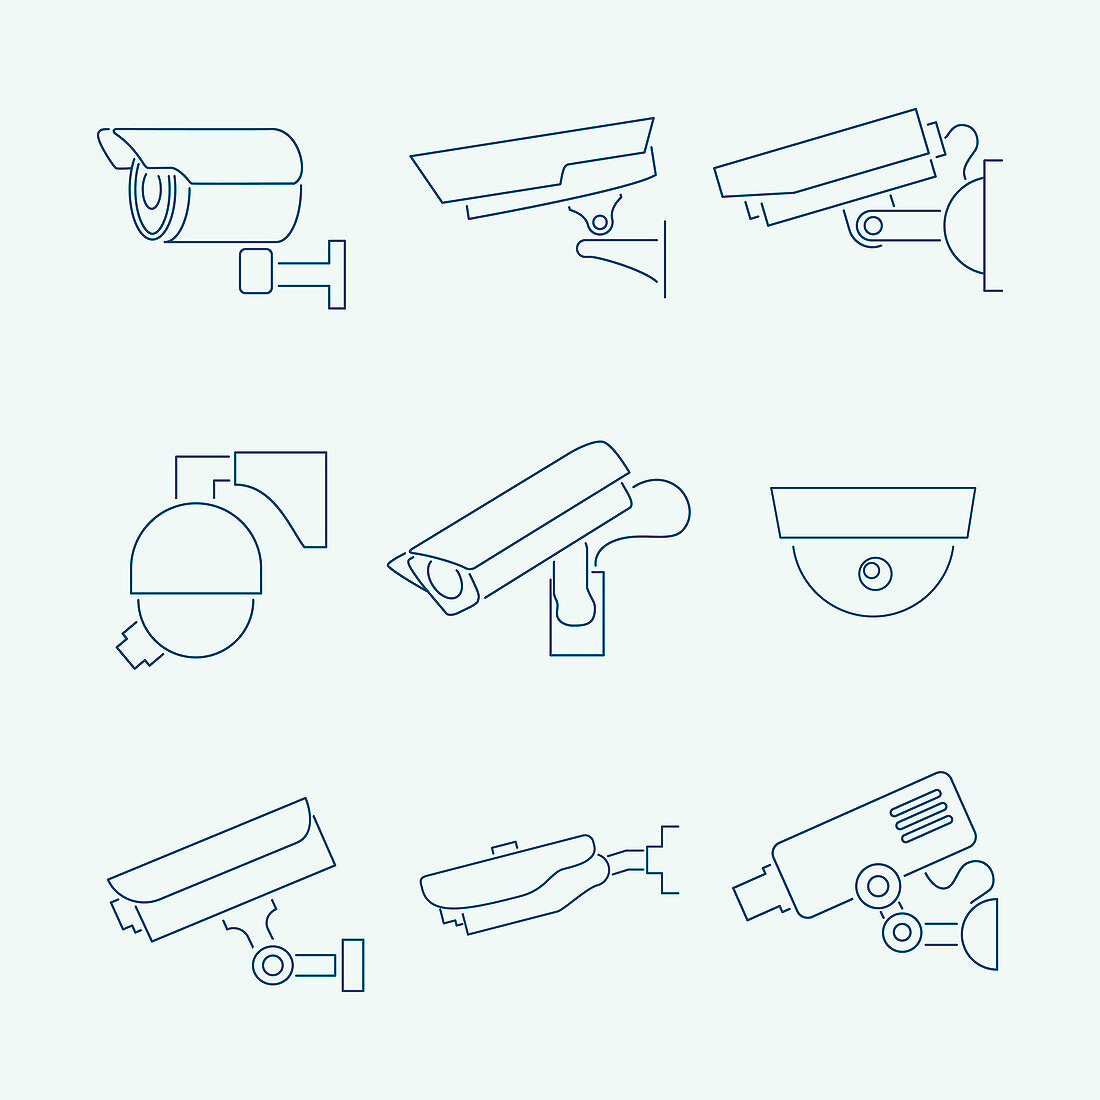 Surveillance icons, illustration